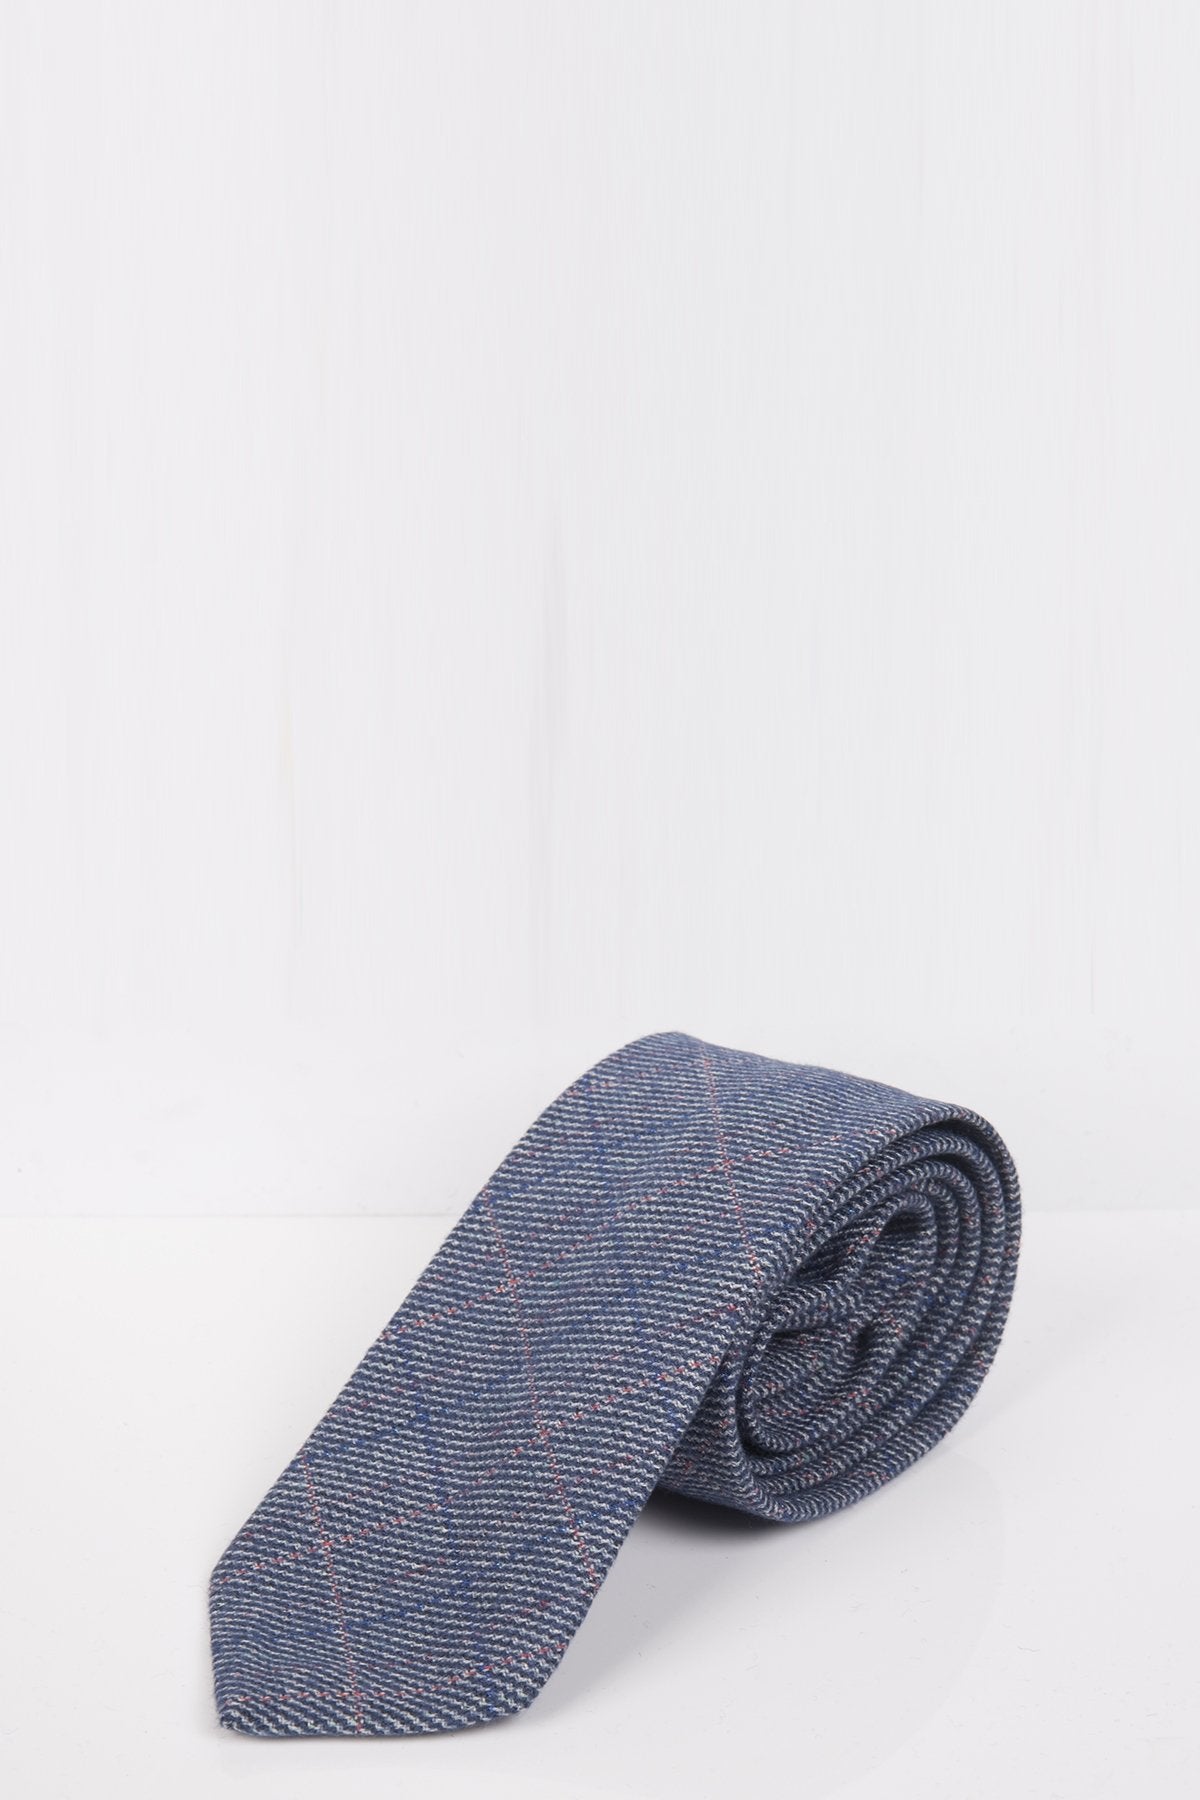 Hilton Blue Tweed Tie